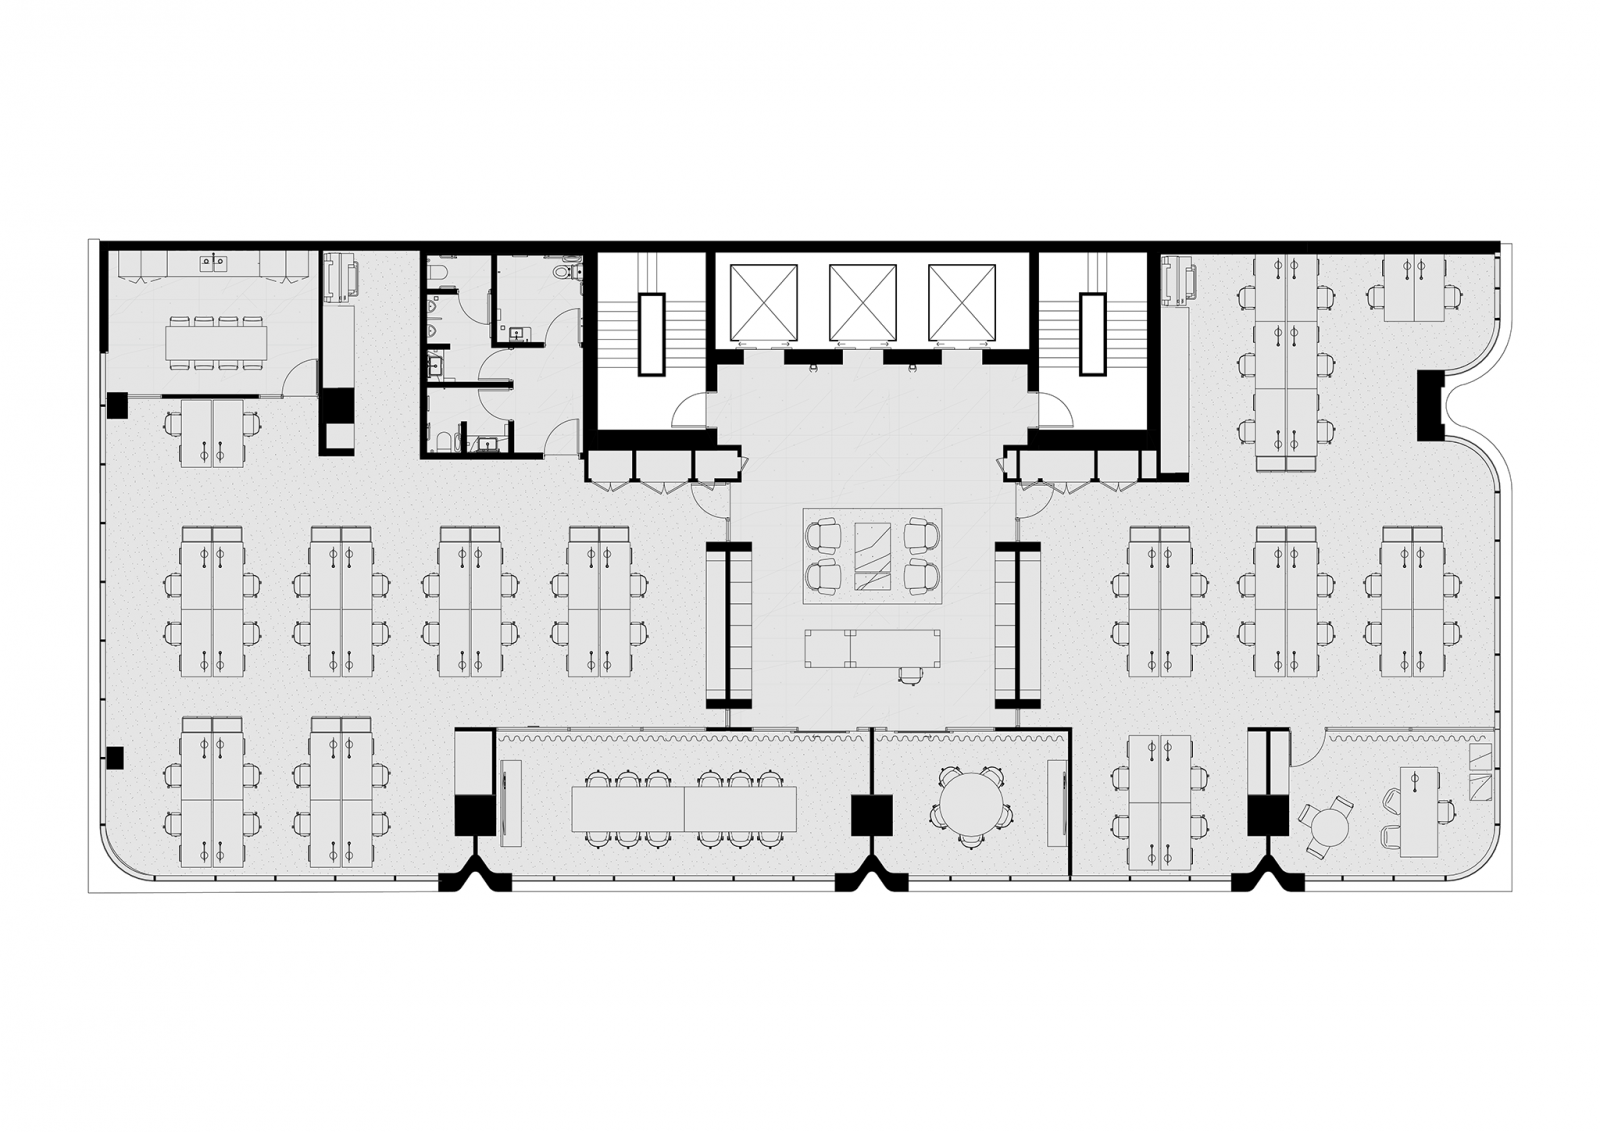 Podium floorplan, single tenancy, 1:10 population density ratio